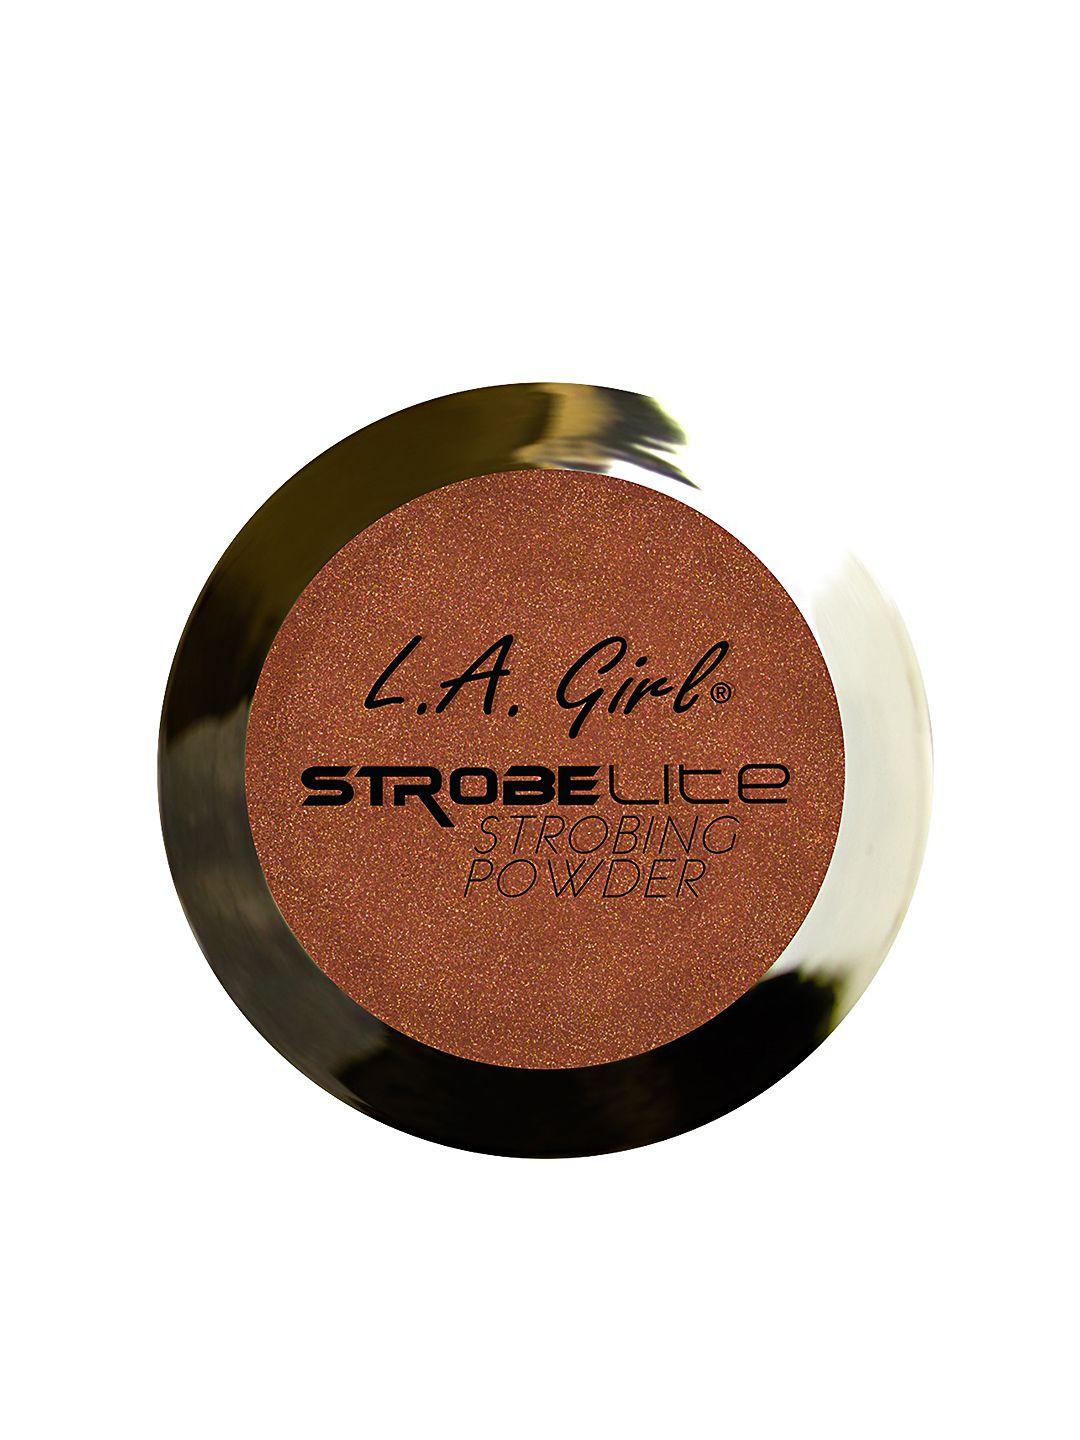 l.-a-girl-10-watt-strobe-lite-strobing-powder-gsp632